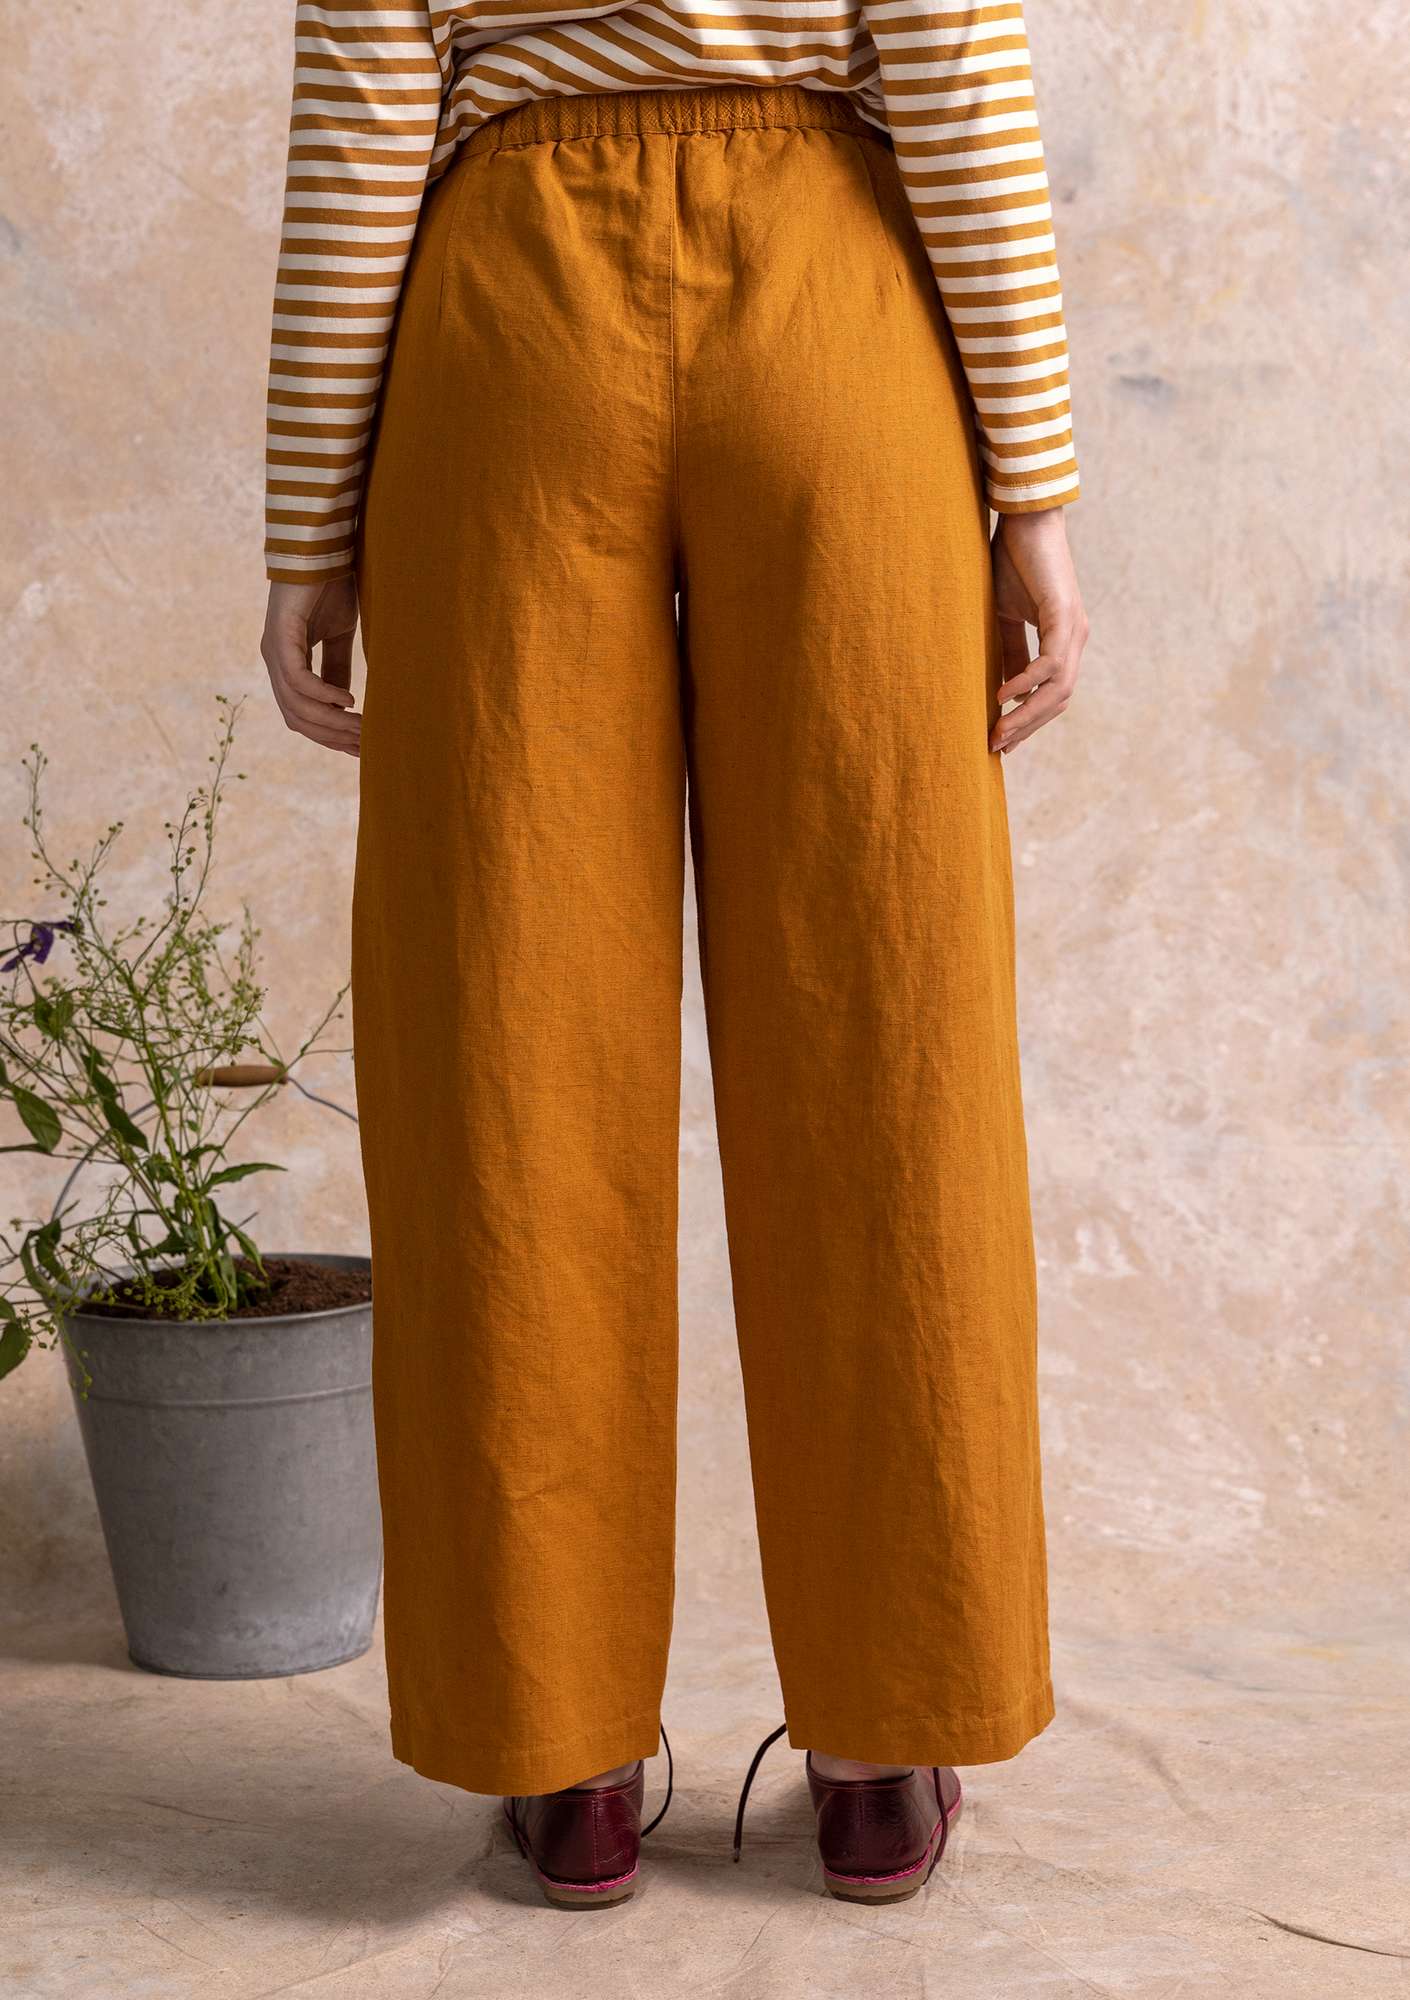 Woven pants in cotton/linen mustard